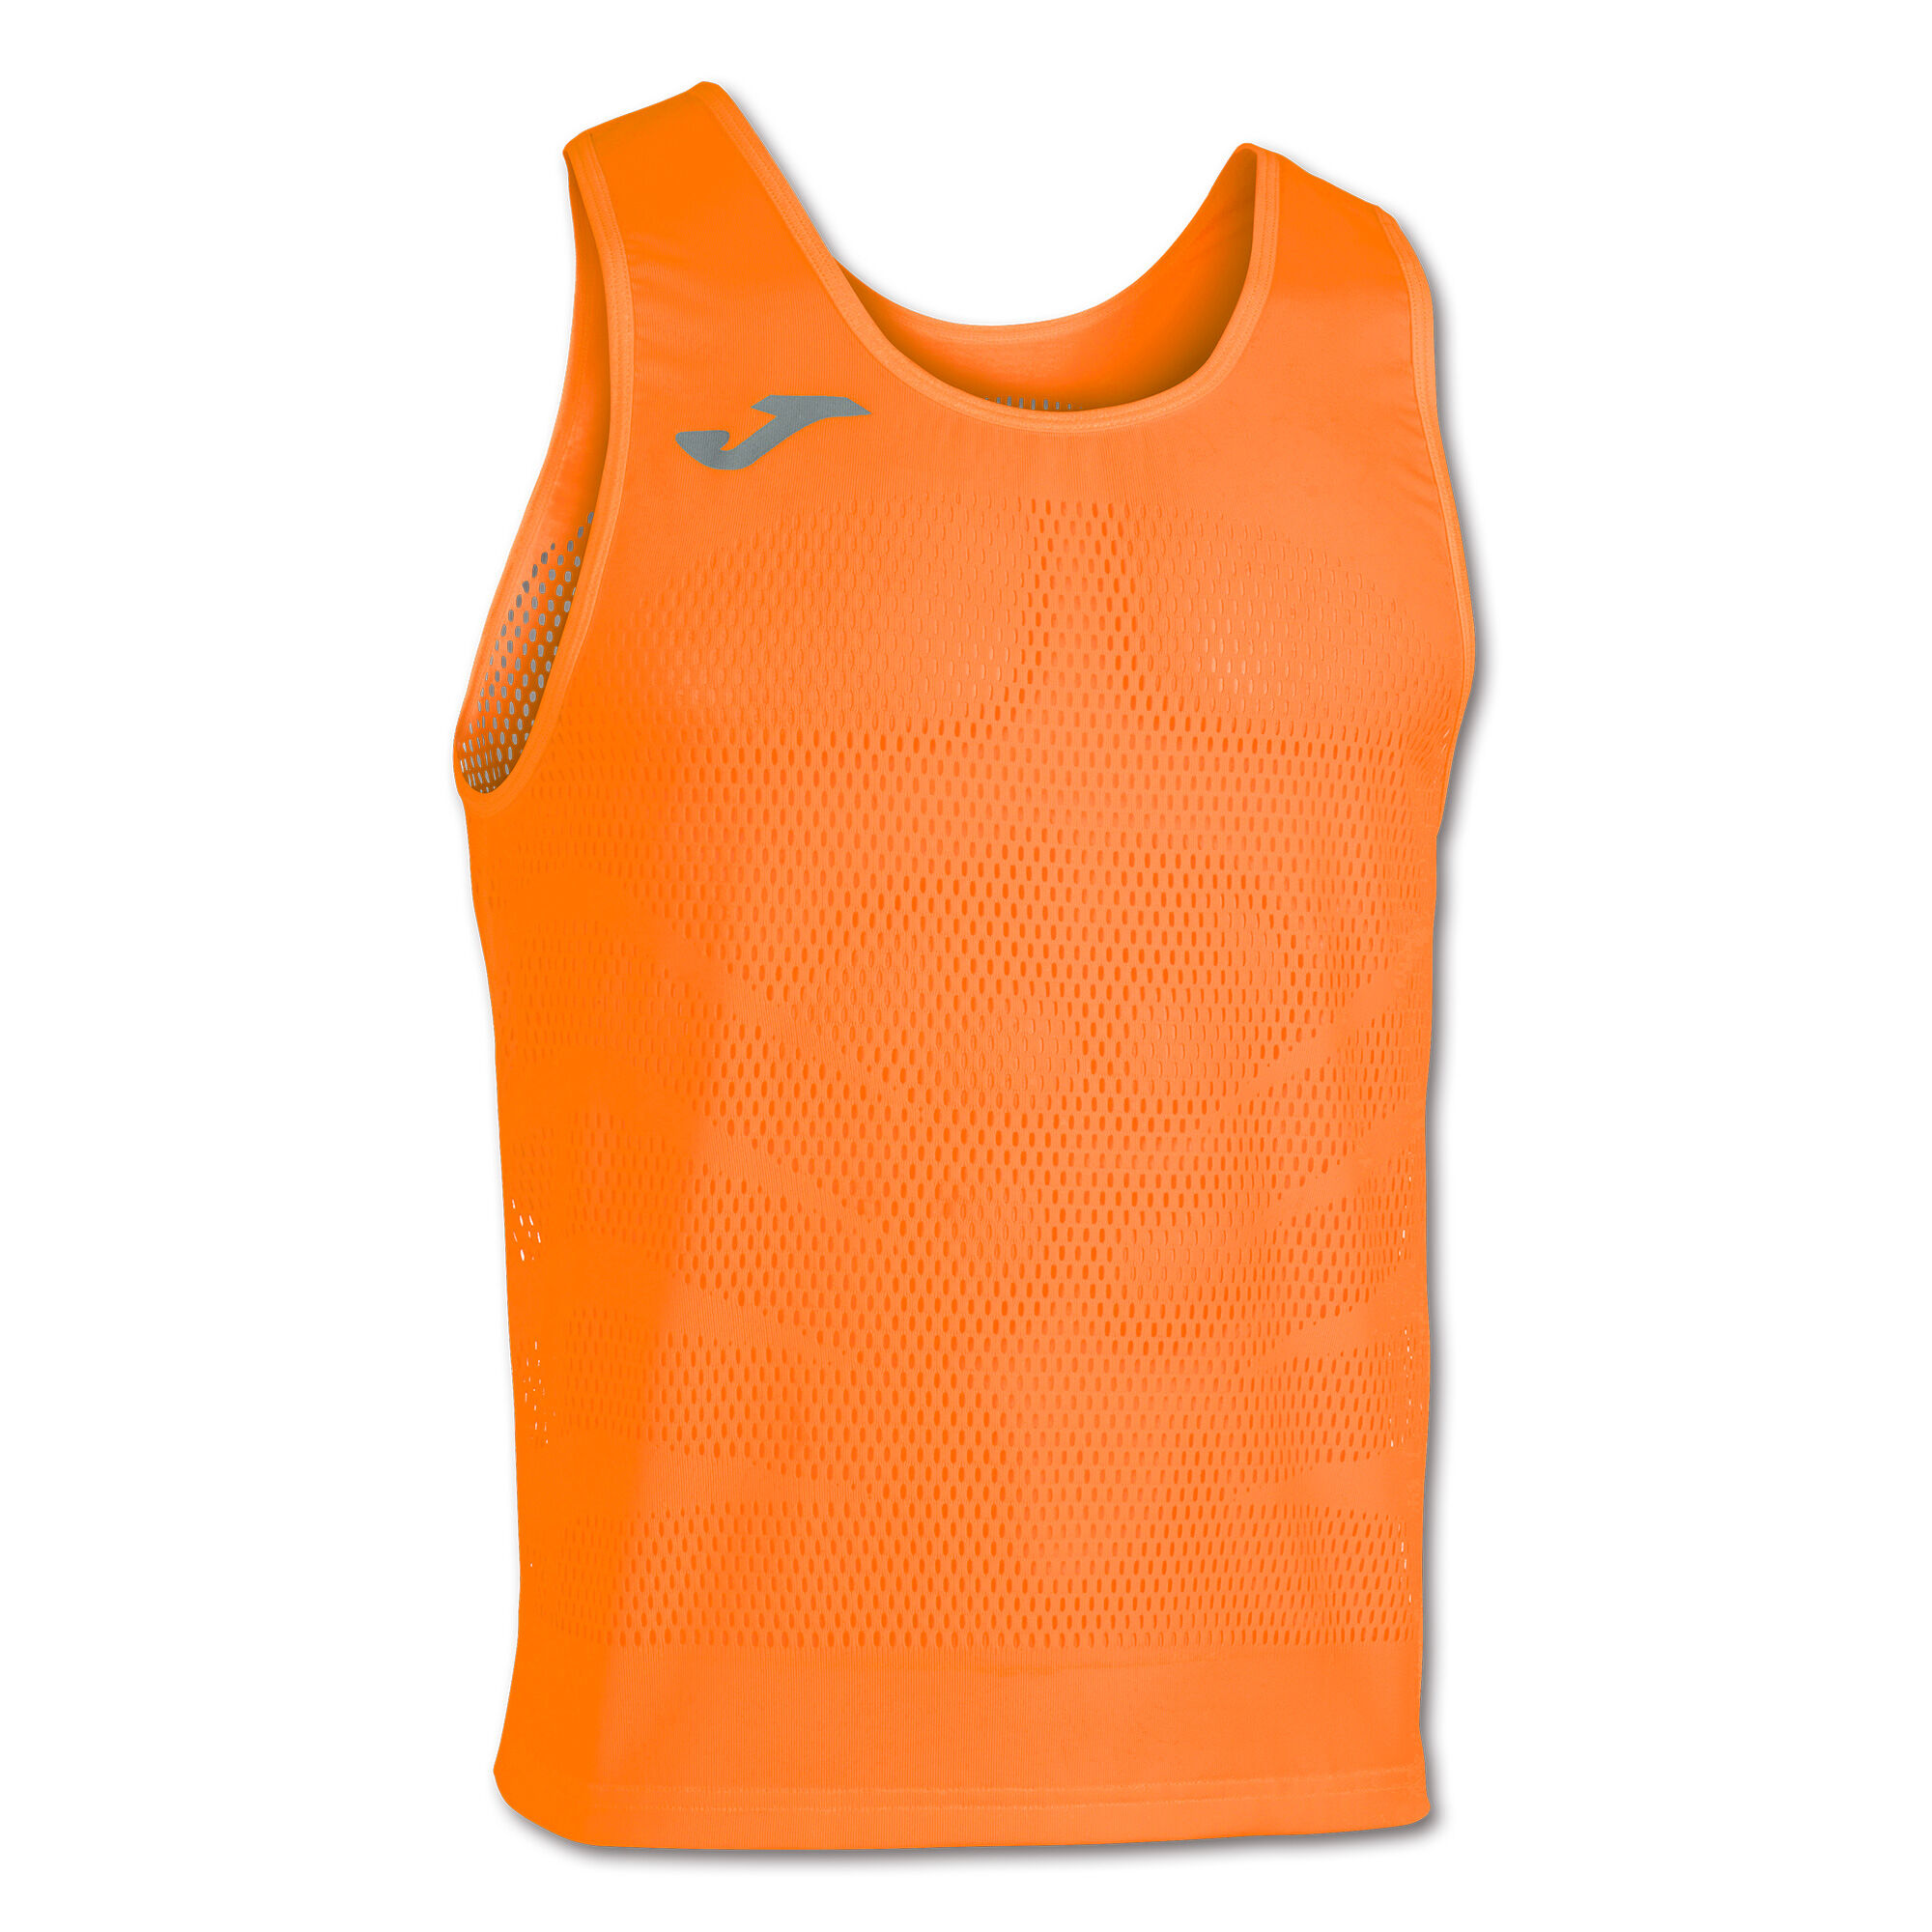 Camiseta tirantes hombre Marathon naranja flúor